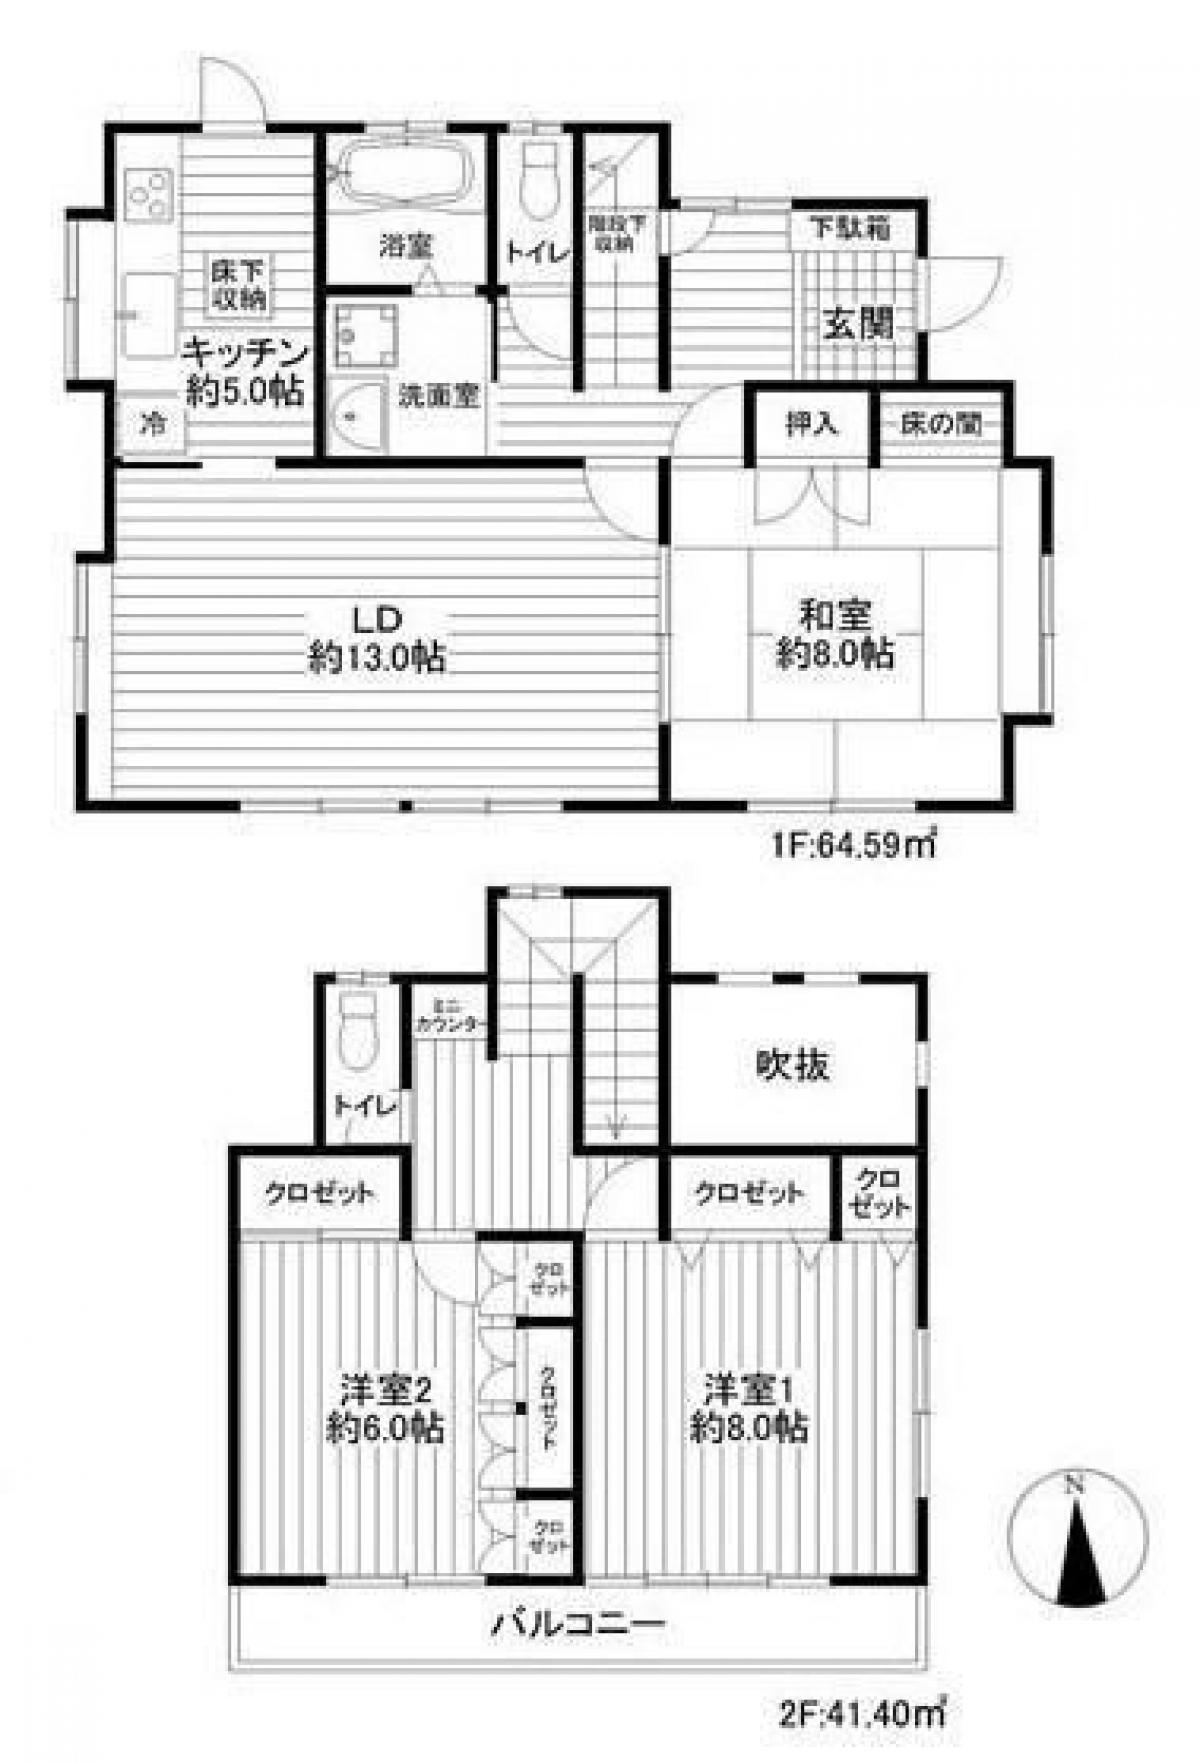 Picture of Home For Sale in Naka Gun Ninomiya Machi, Kanagawa, Japan